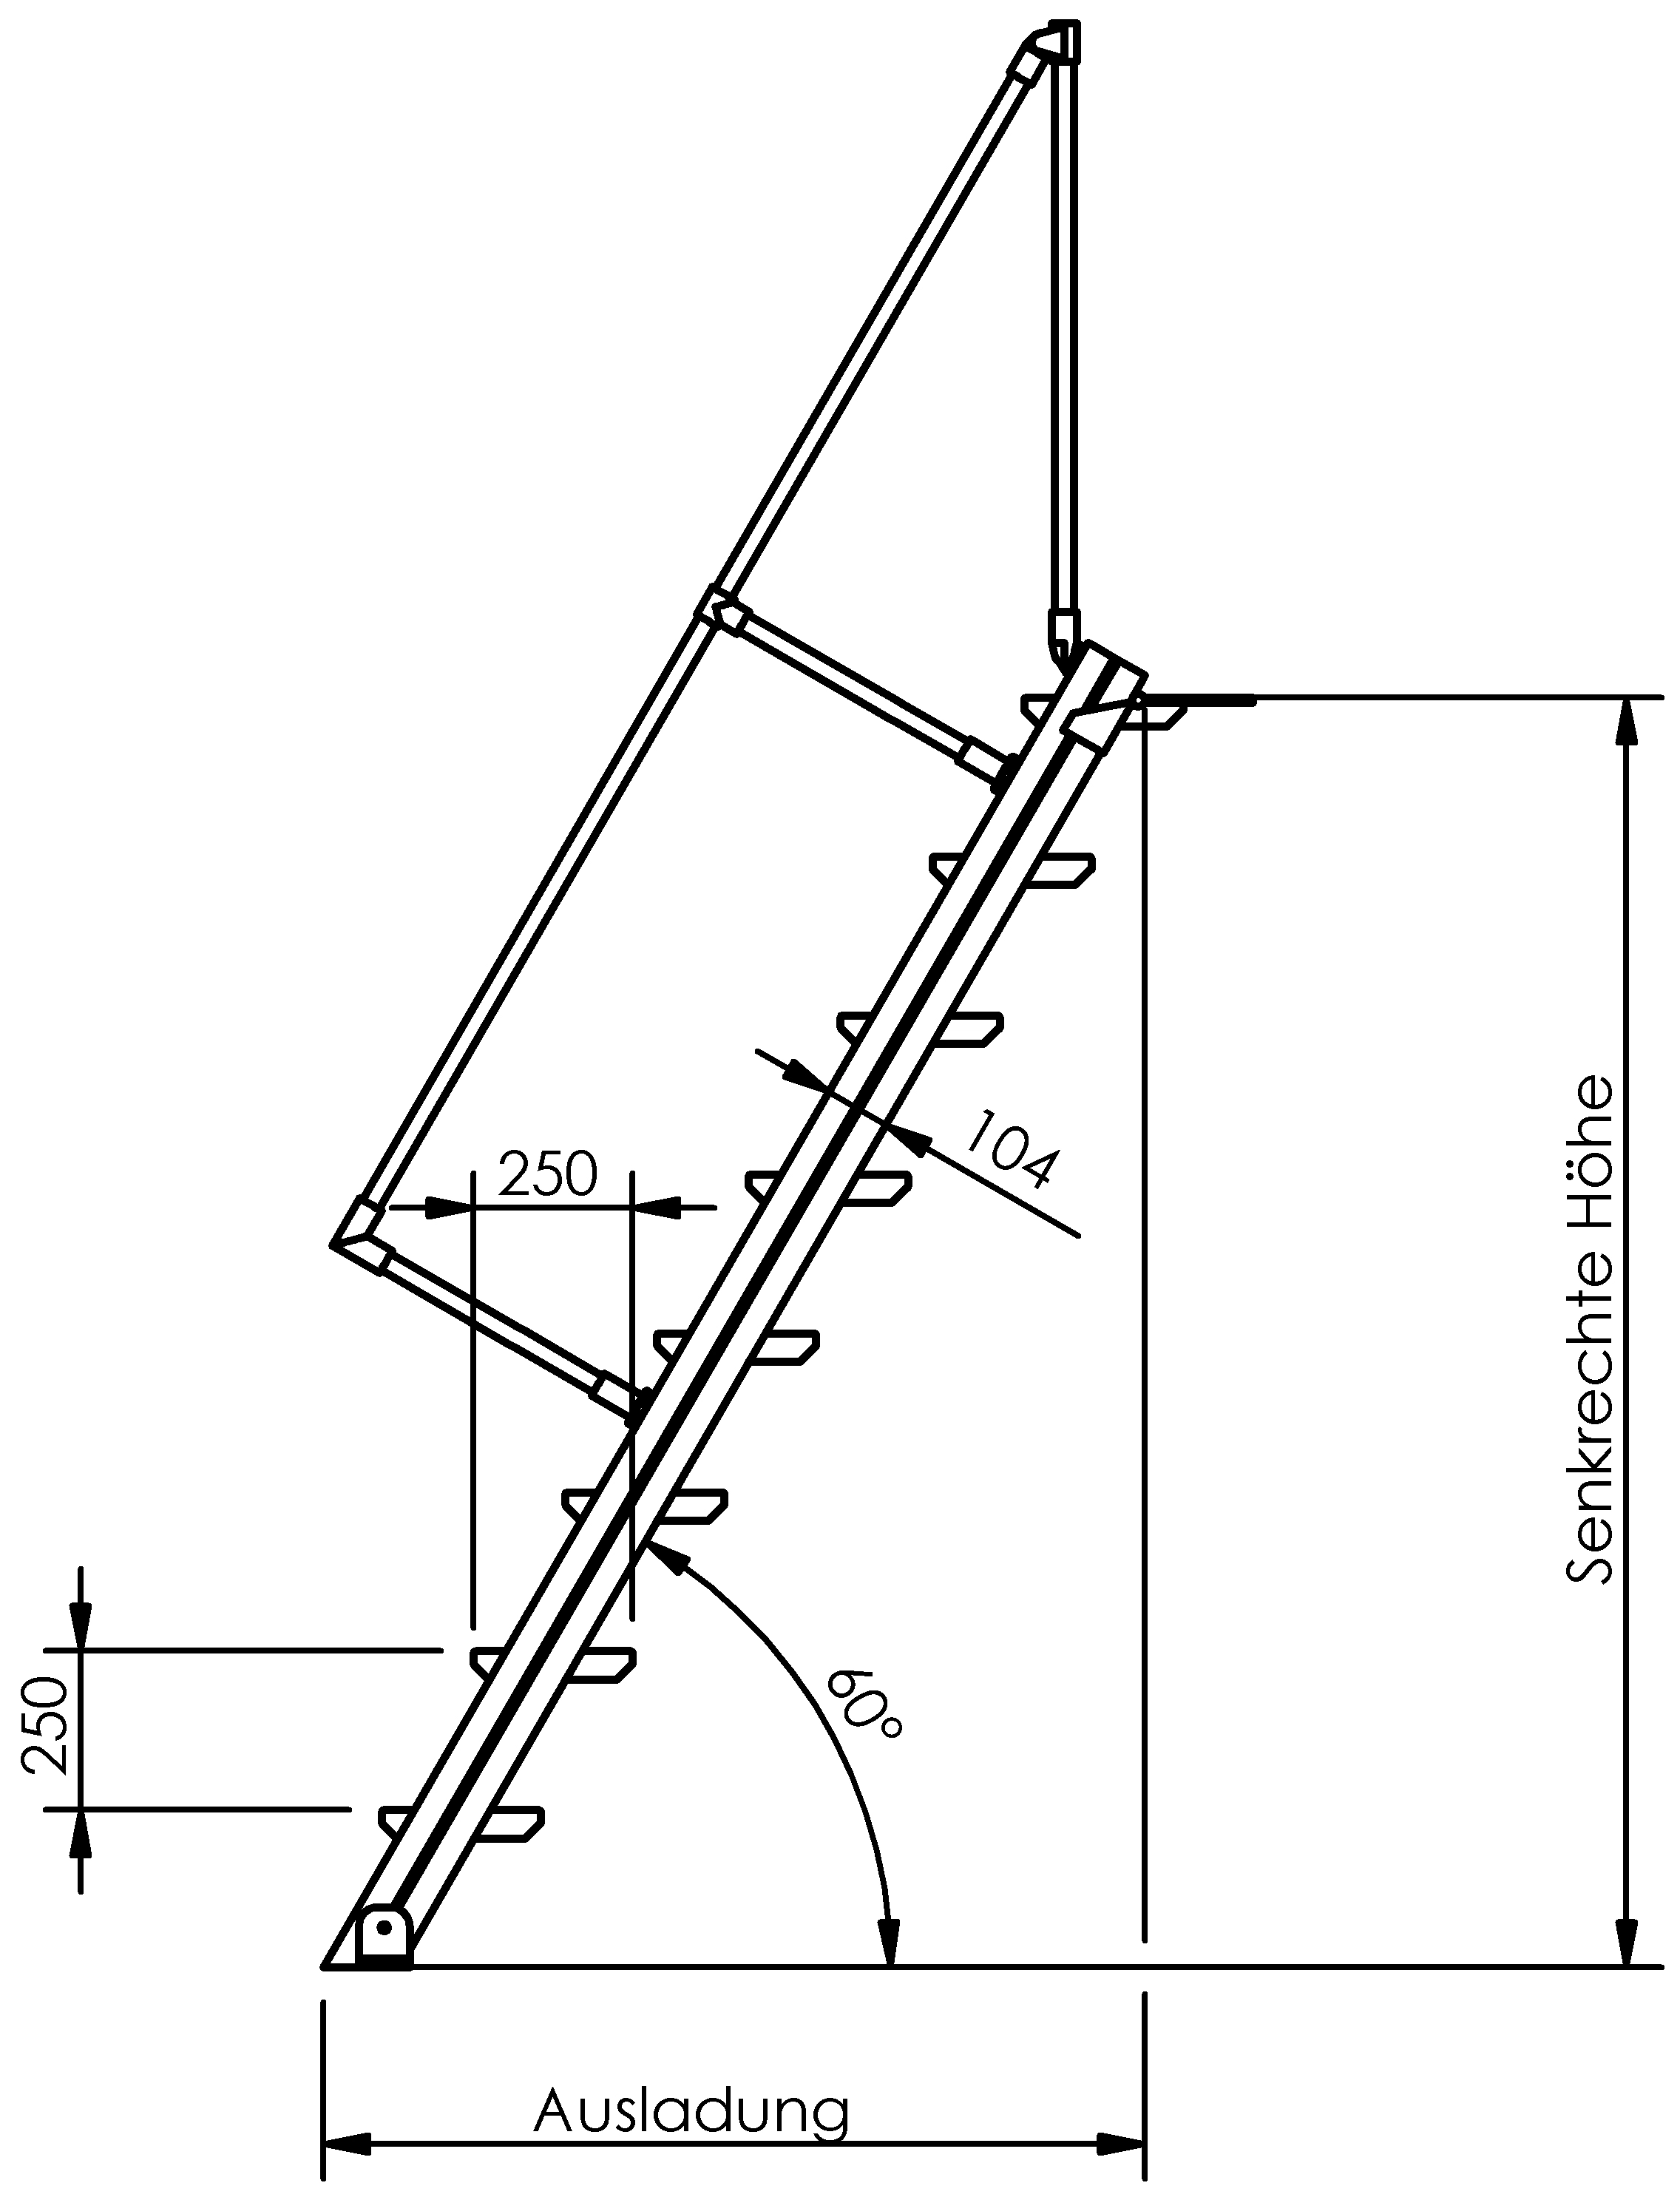 Selbstbautreppen, LW 800mm, Stufen aus Alu, Neigung 45°